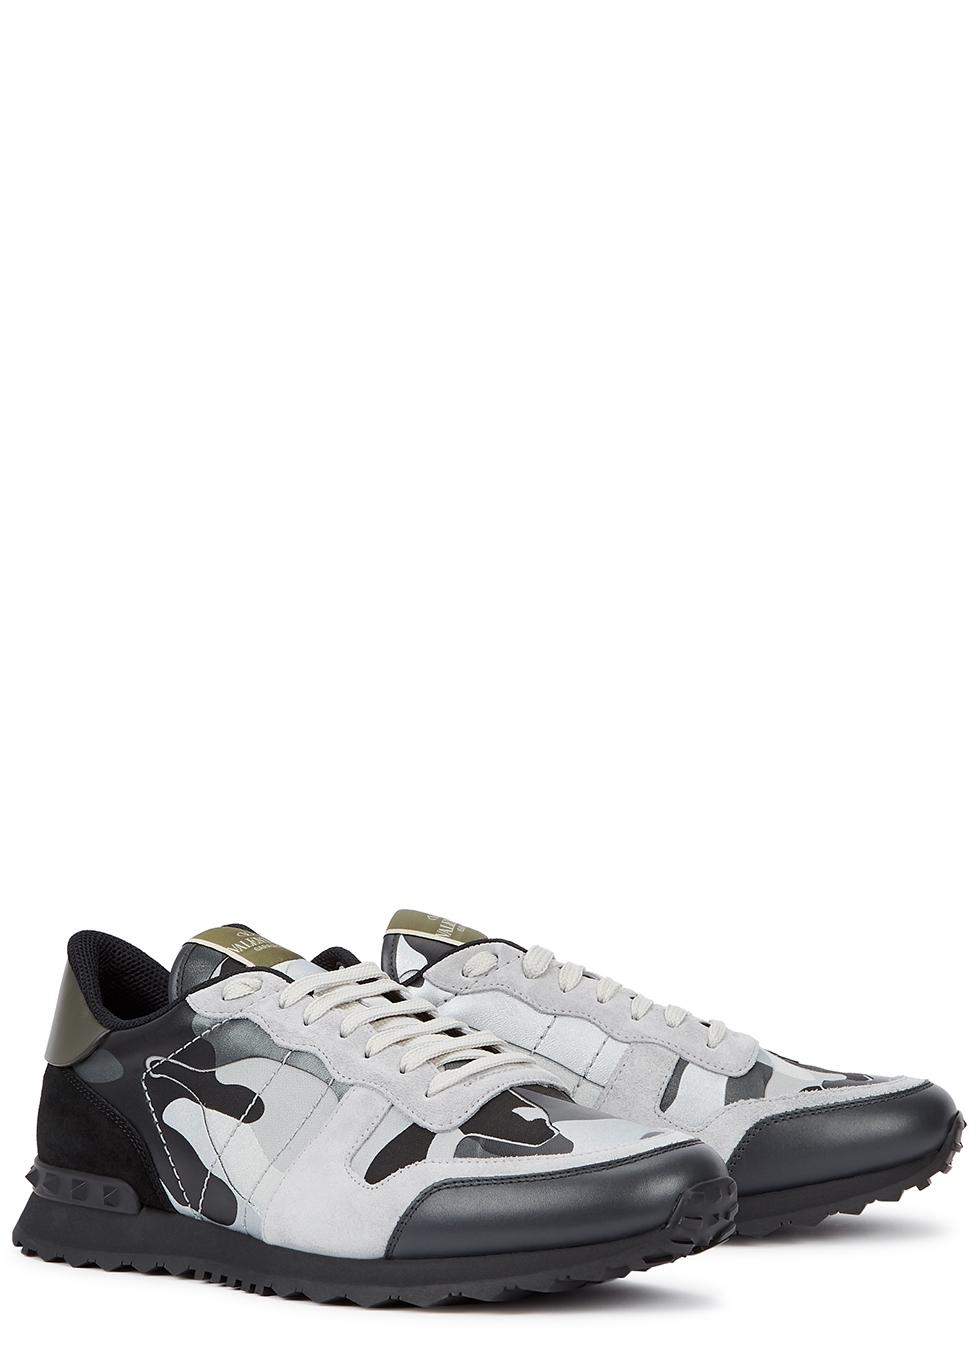 Valentino Garavani Rockrunner Camouflage Suede Sneakers in Gray for Men ...